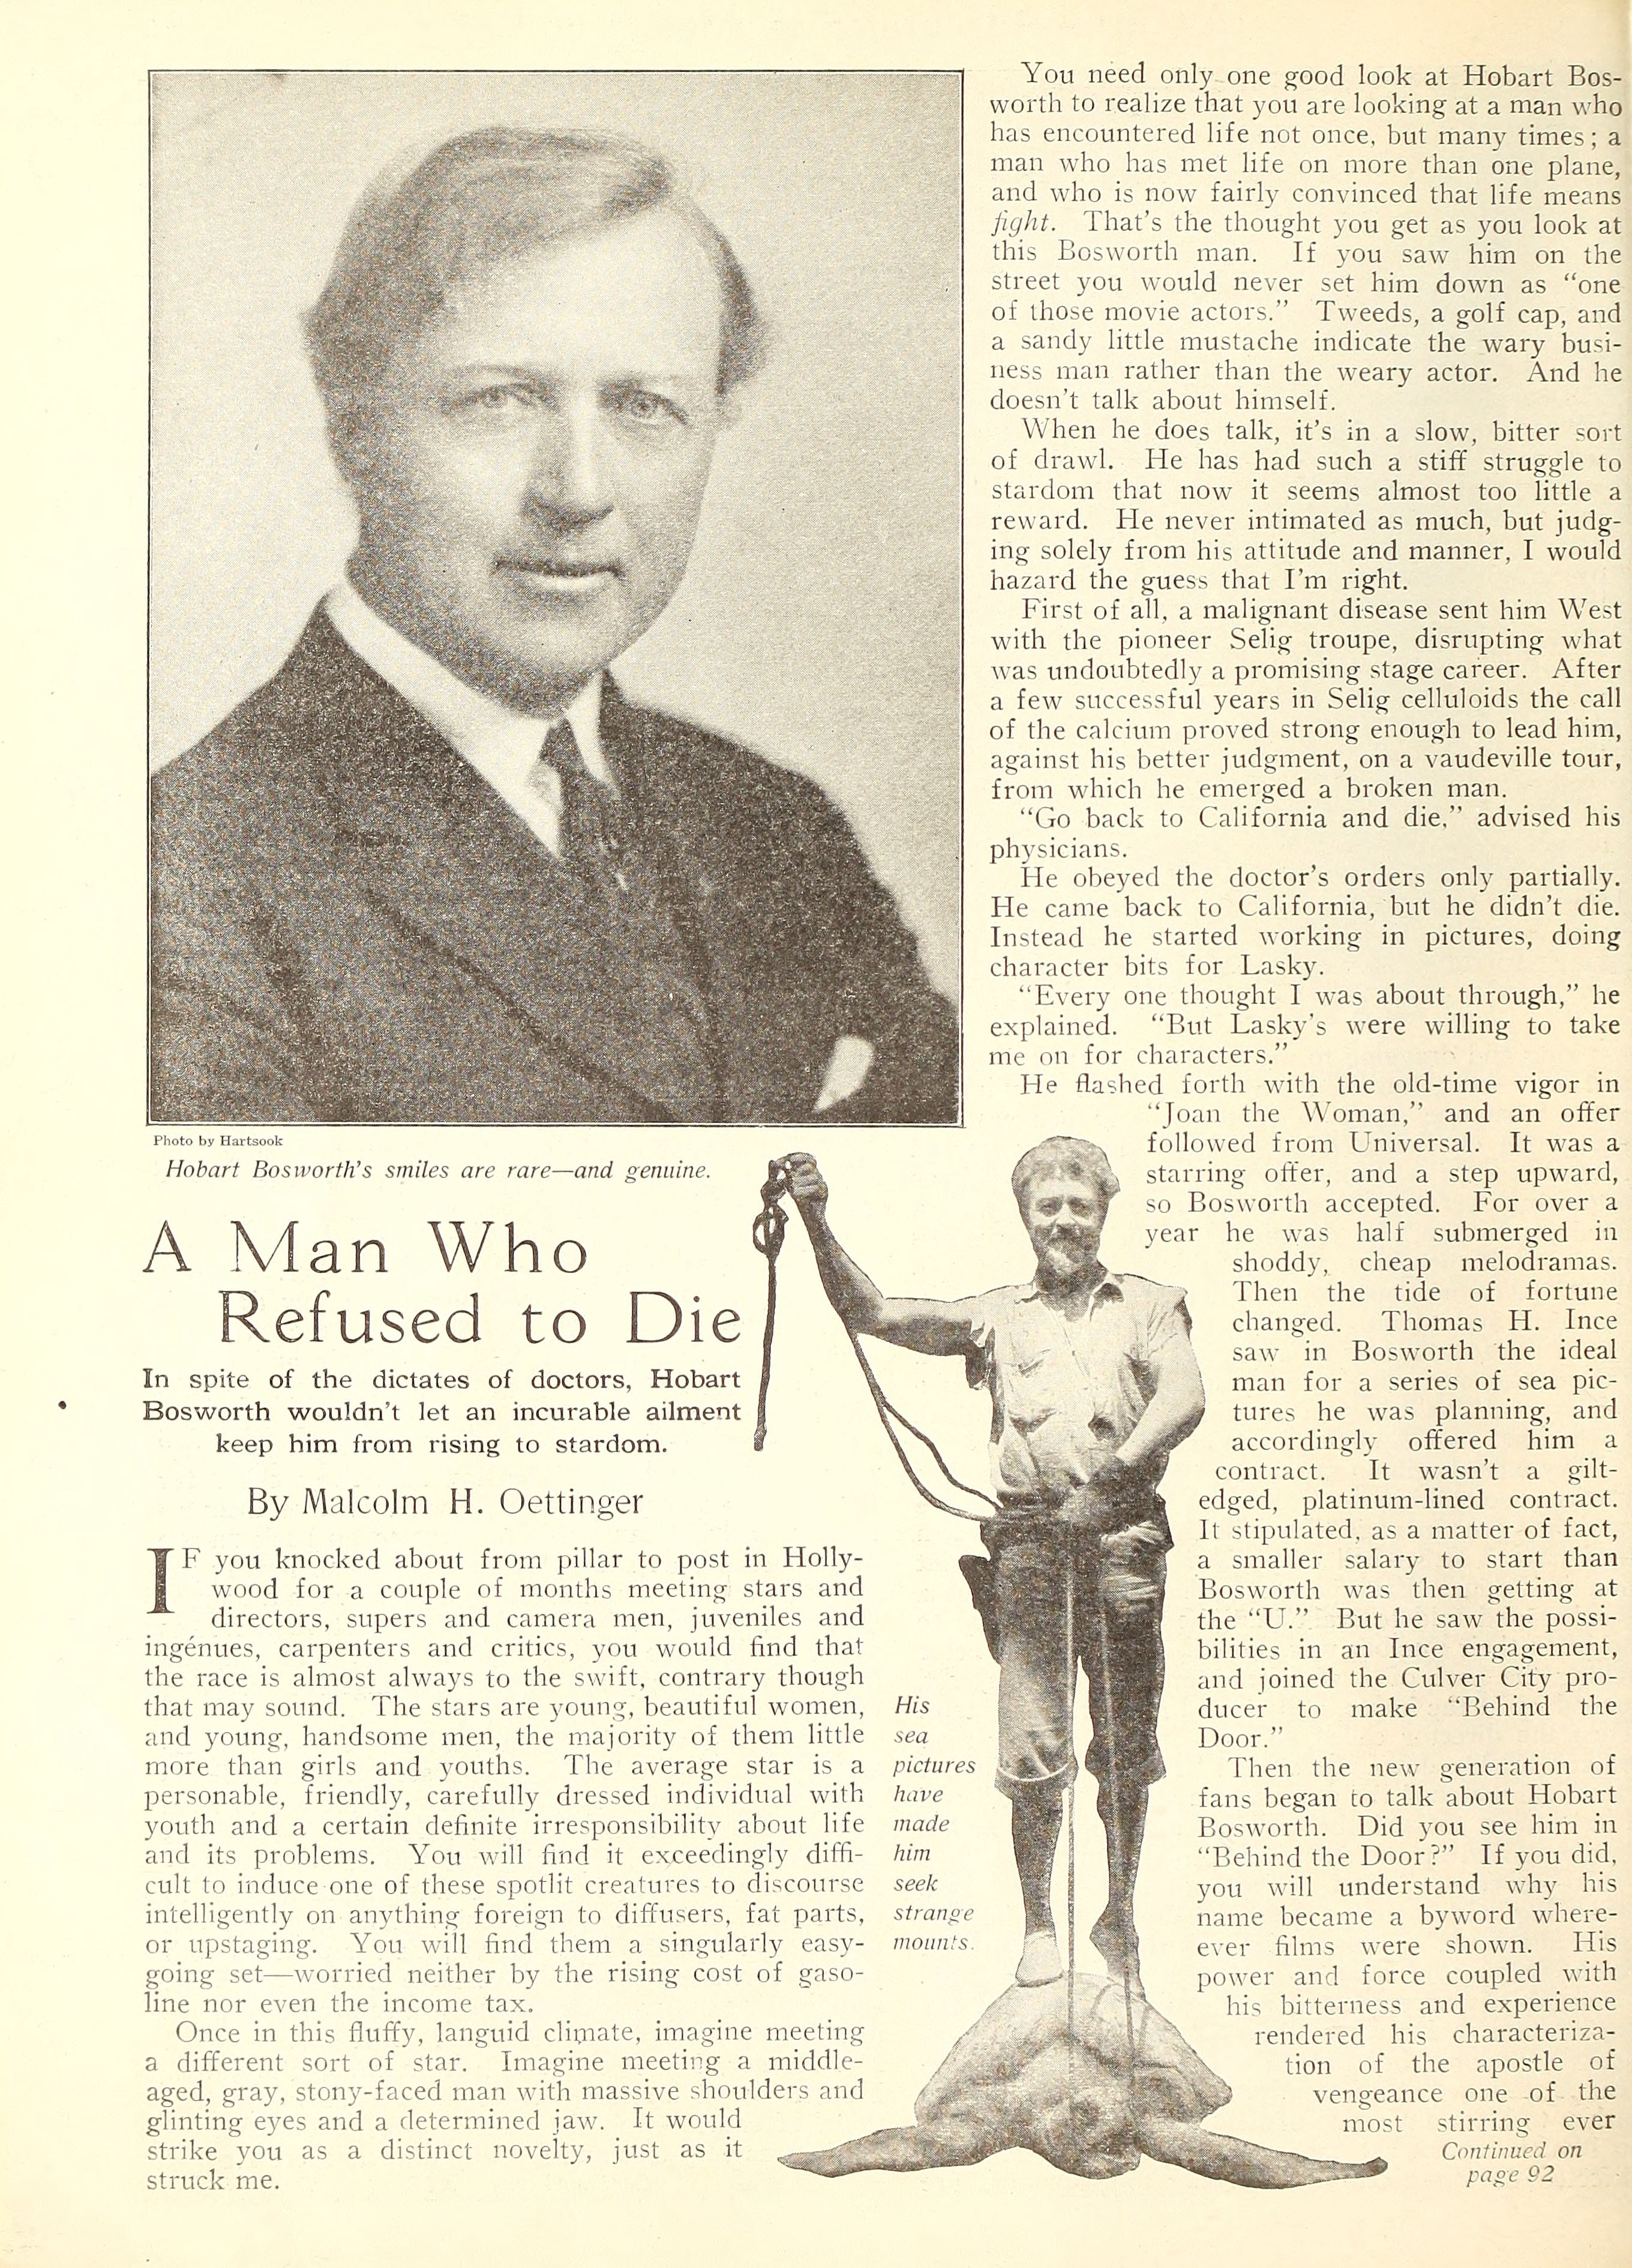 Hobart Bosworth — A Man Who Refused to Die (1921) | www.vintoz.com